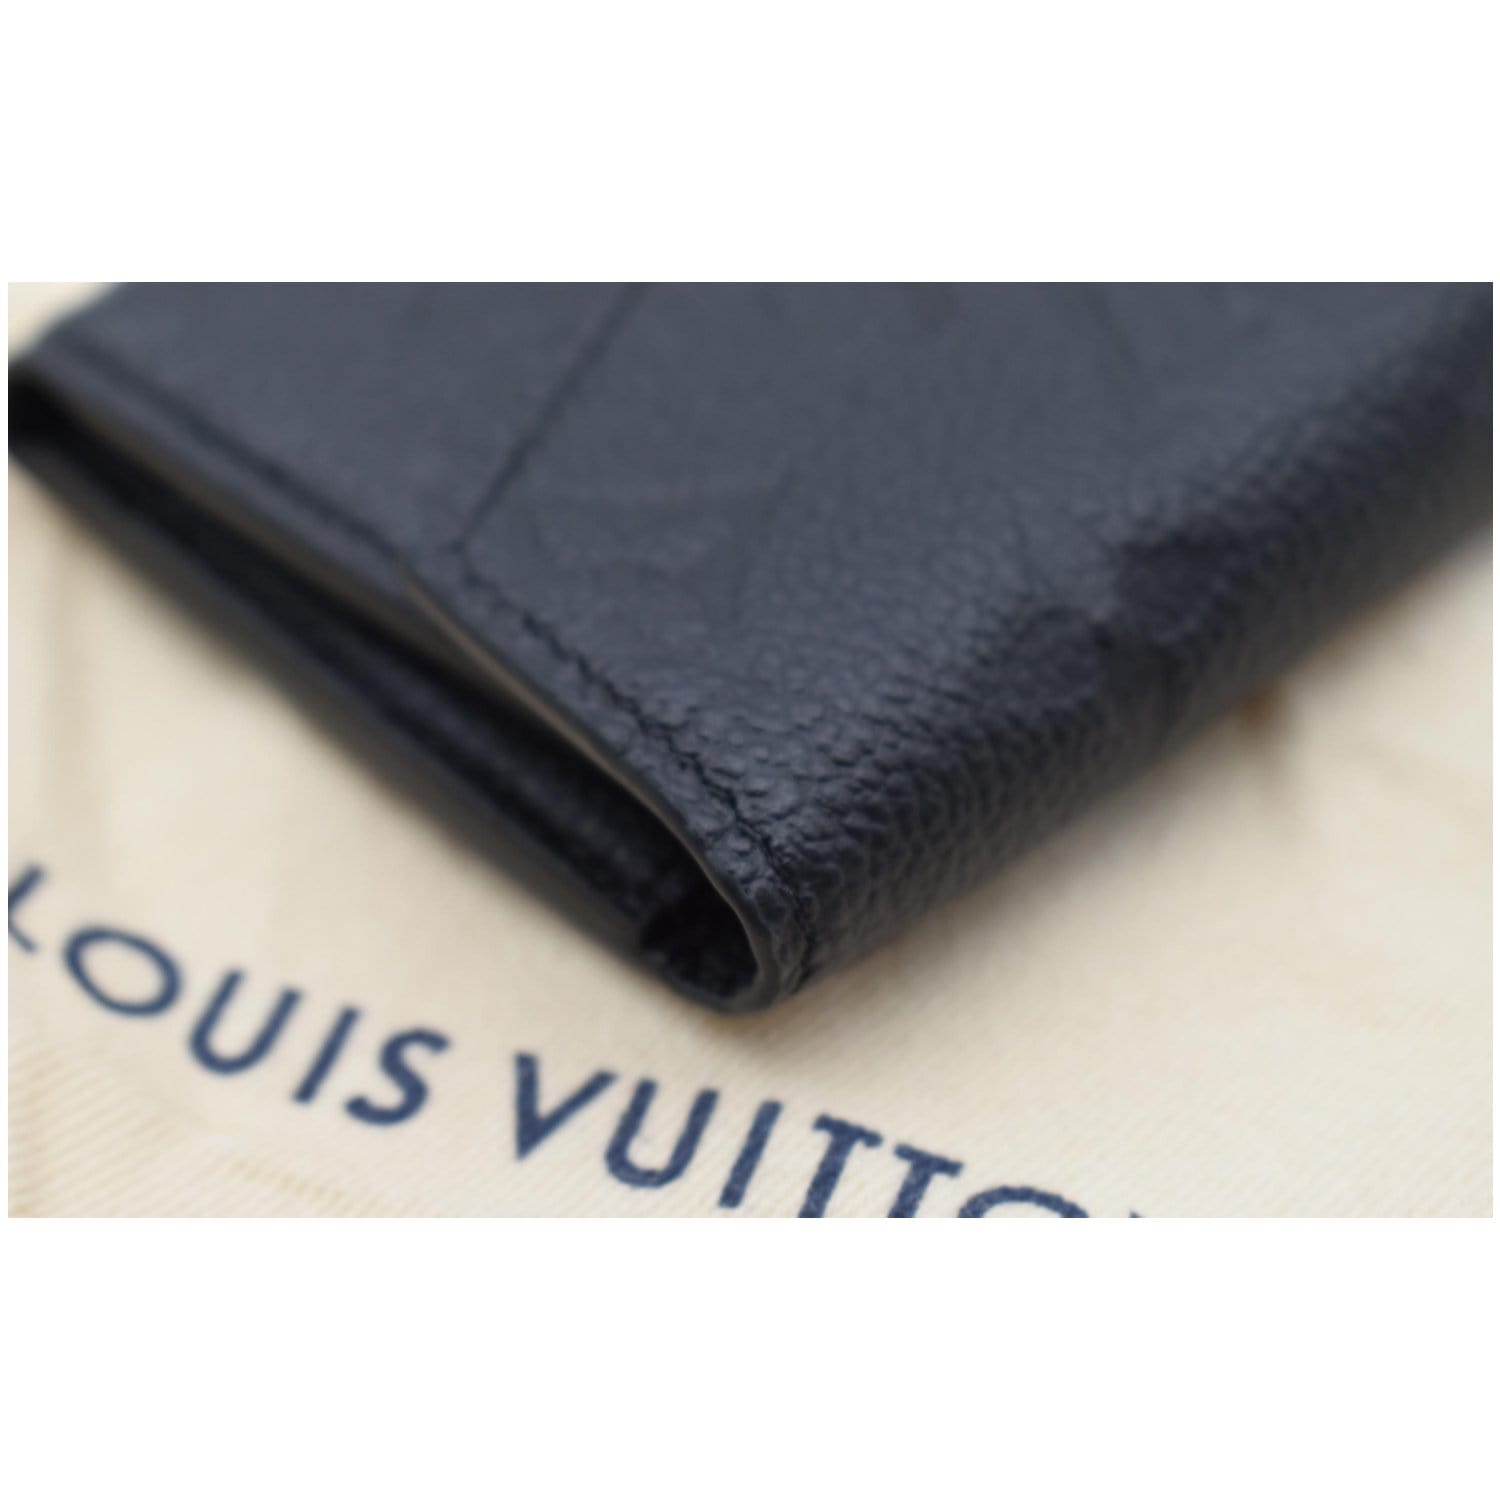 Louis Vuitton Zoe Wallet Empreinte Reviewer